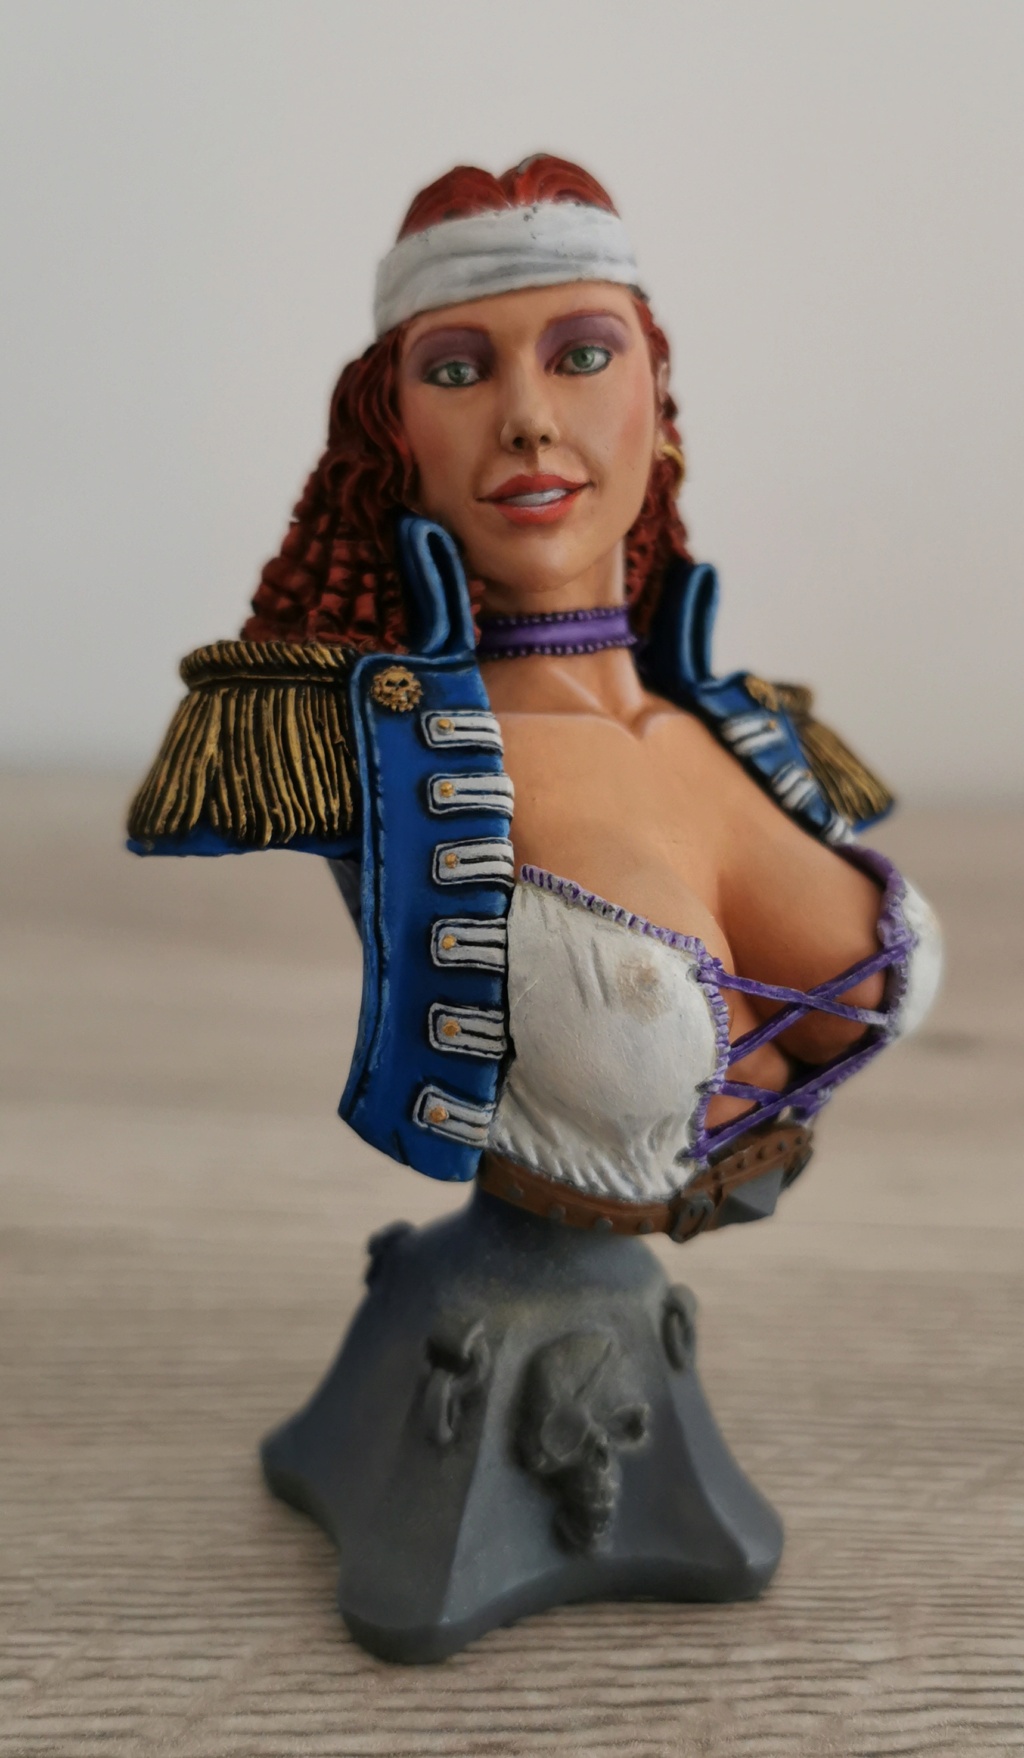 Femme de Pirate Img_2075